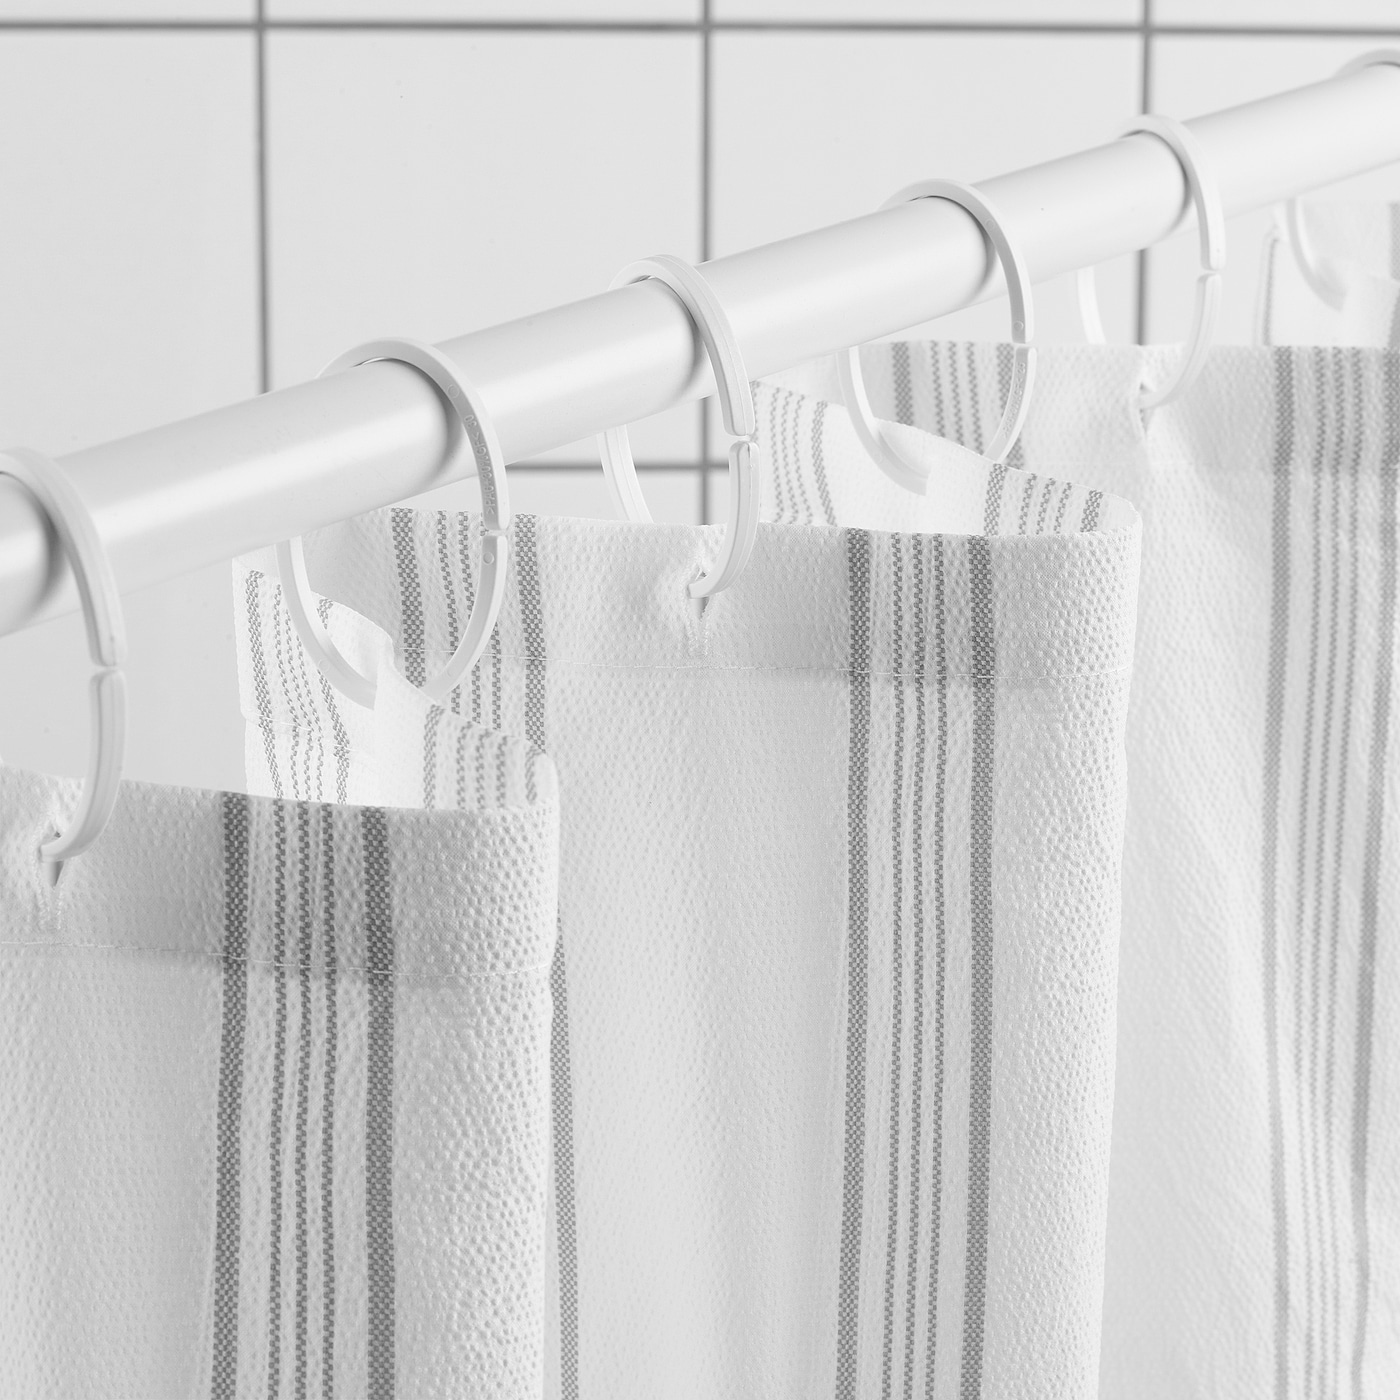 SVARTSTARR shower curtain white/grey - IKEA